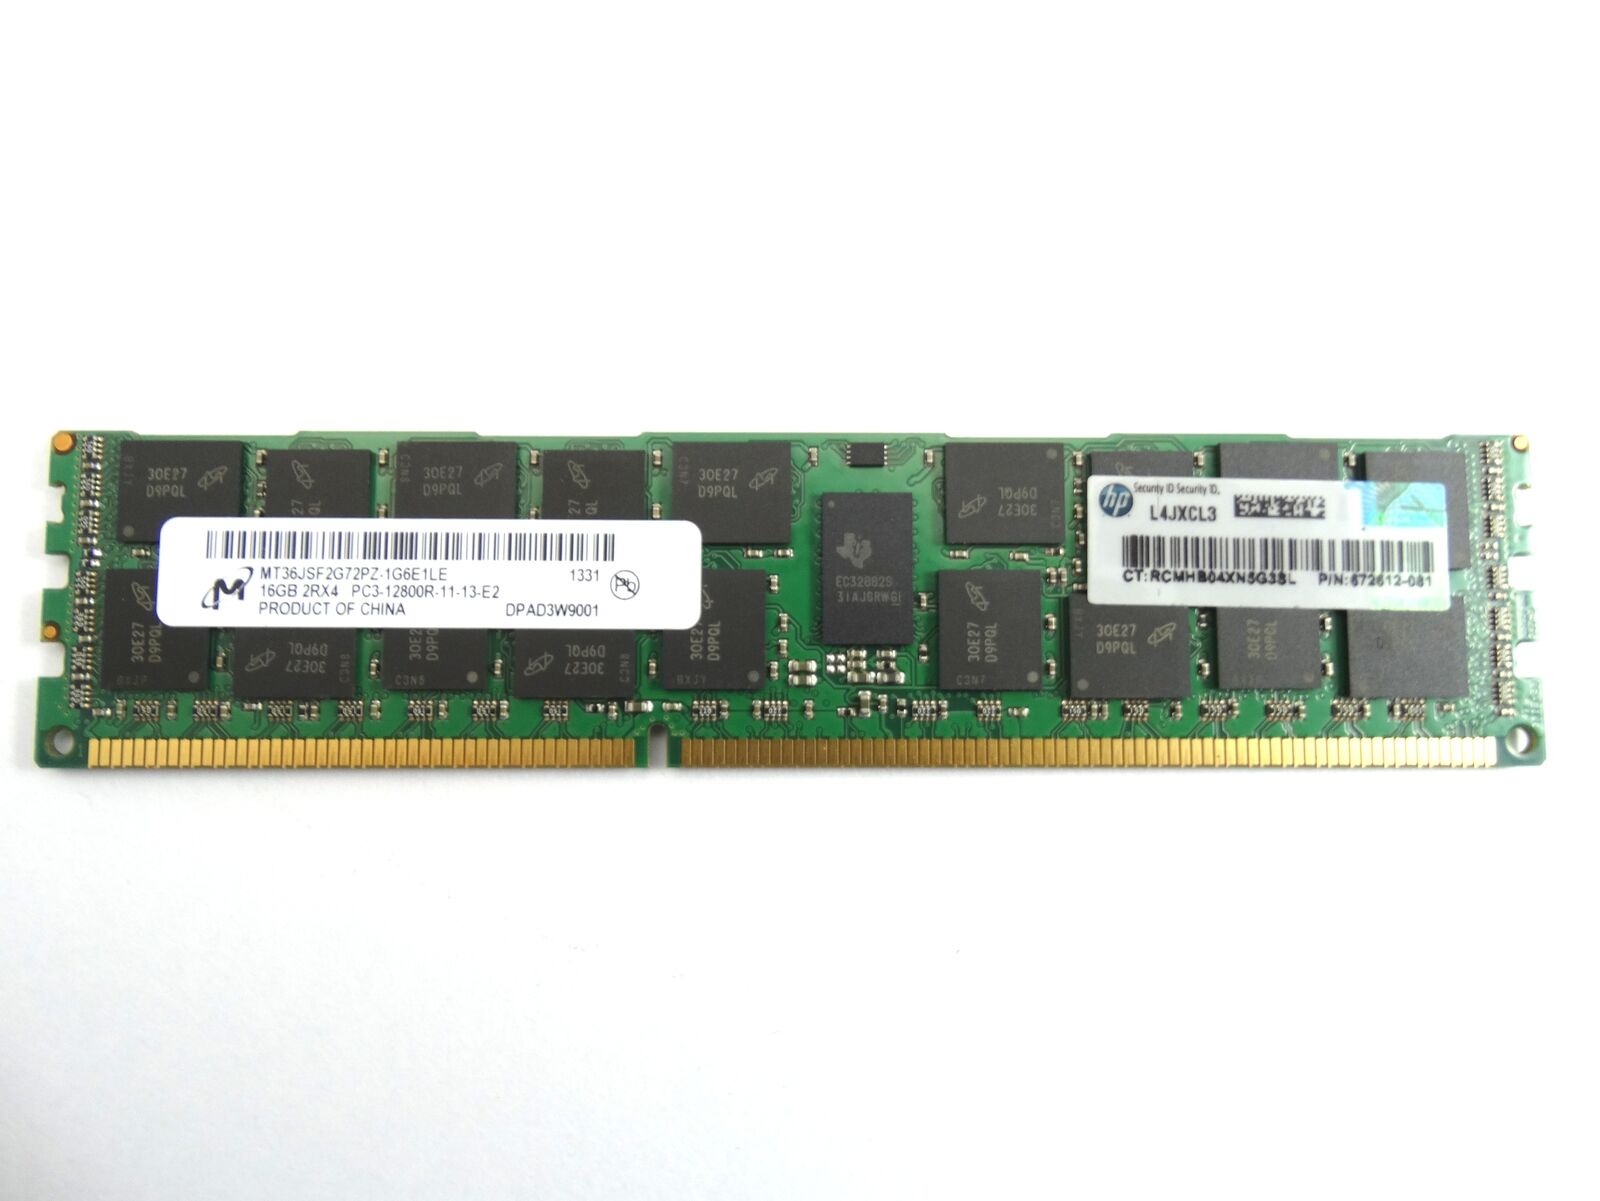 Серверная память ECC Reg HP 16GB DDR3 MT36JSF2G72PZ-1G6E1L